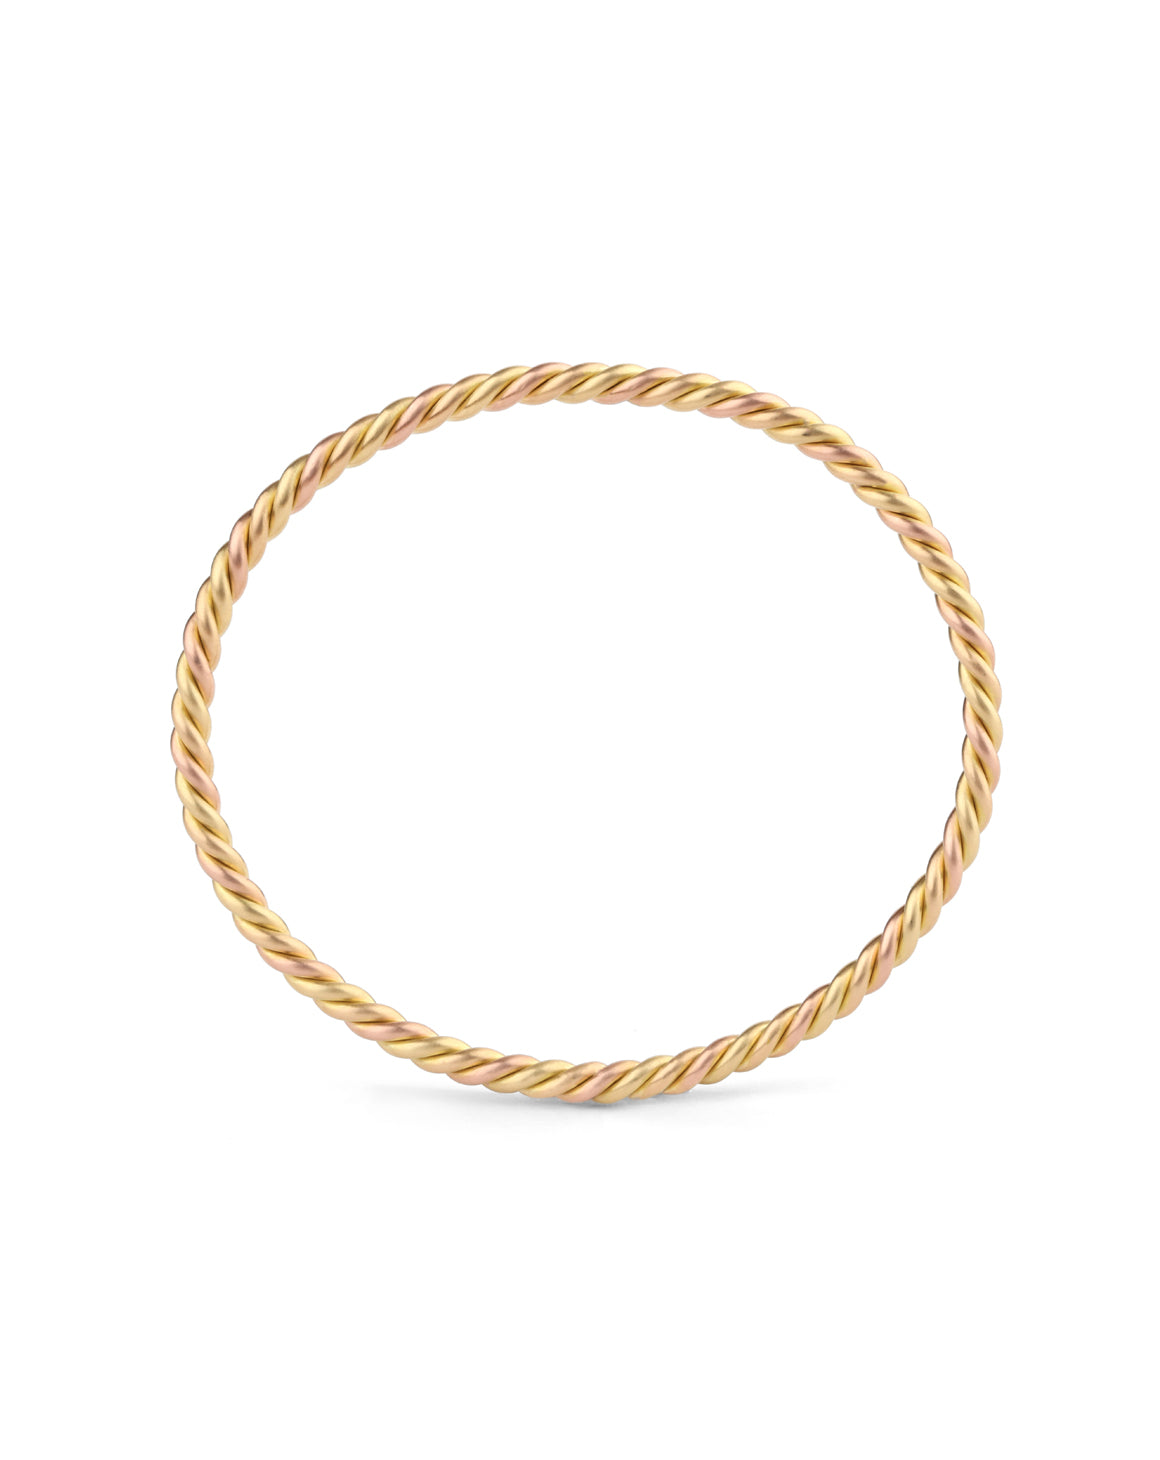 Three Strand Rope Bangle - Multi Gold - Standard